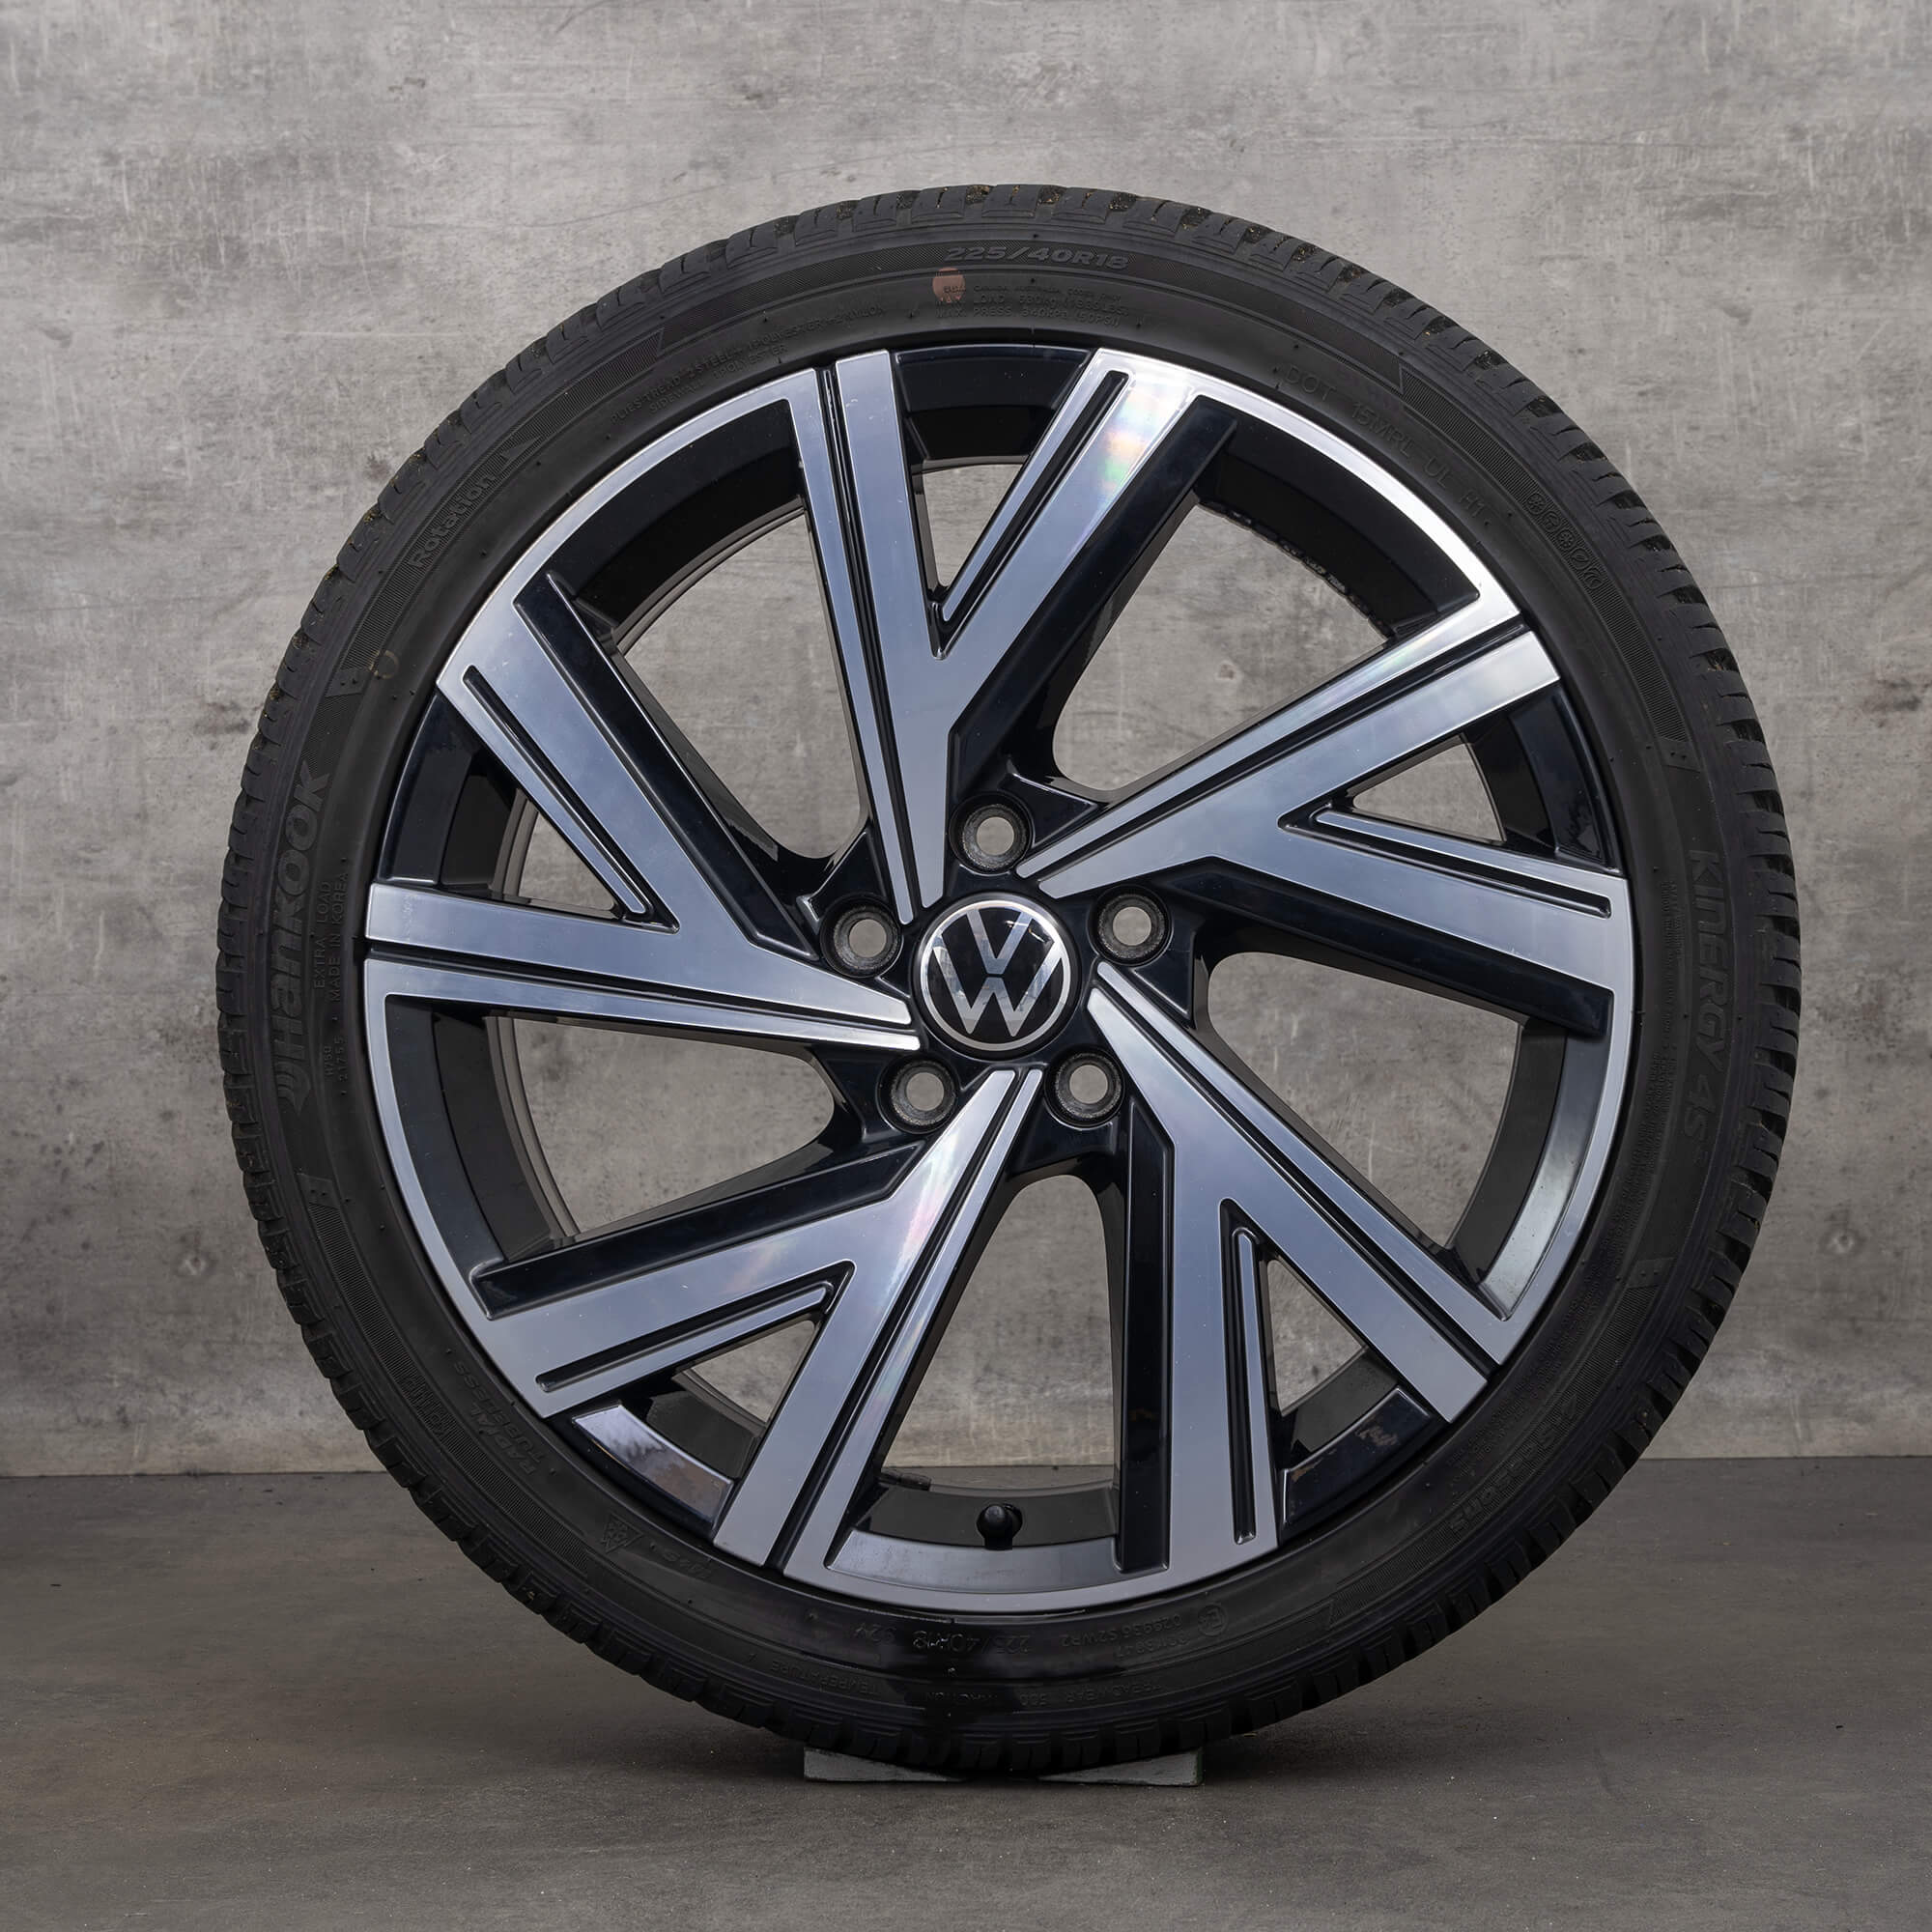 VW Golf 6 7 8 R ruote per tutte le stagioni pneumatici cerchi da 18 pollici